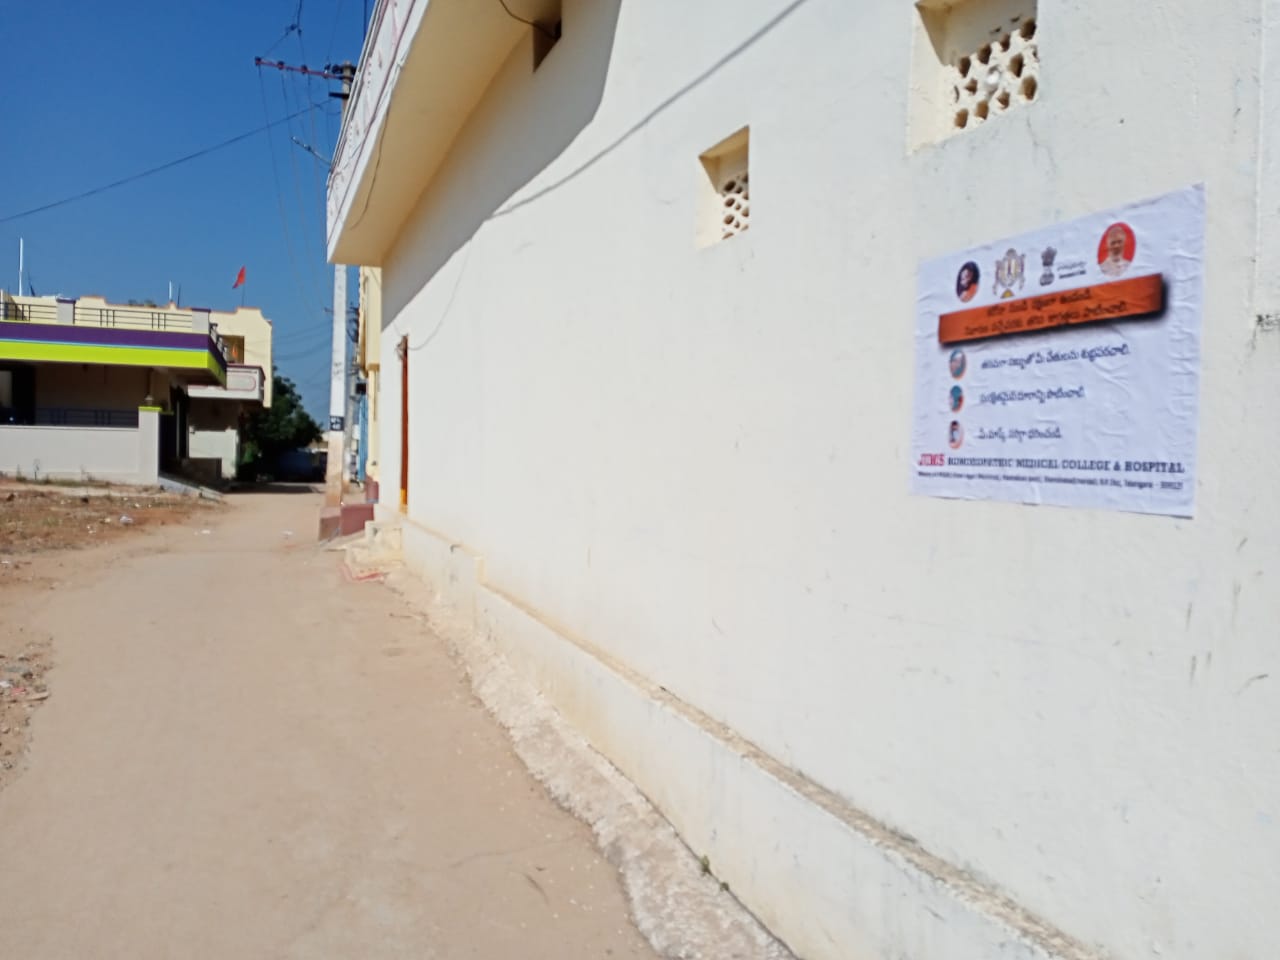 Janandolan Campaign On COVID 19 - IEC Poster Sticking At Rangapur Village Of Kothur Mandal